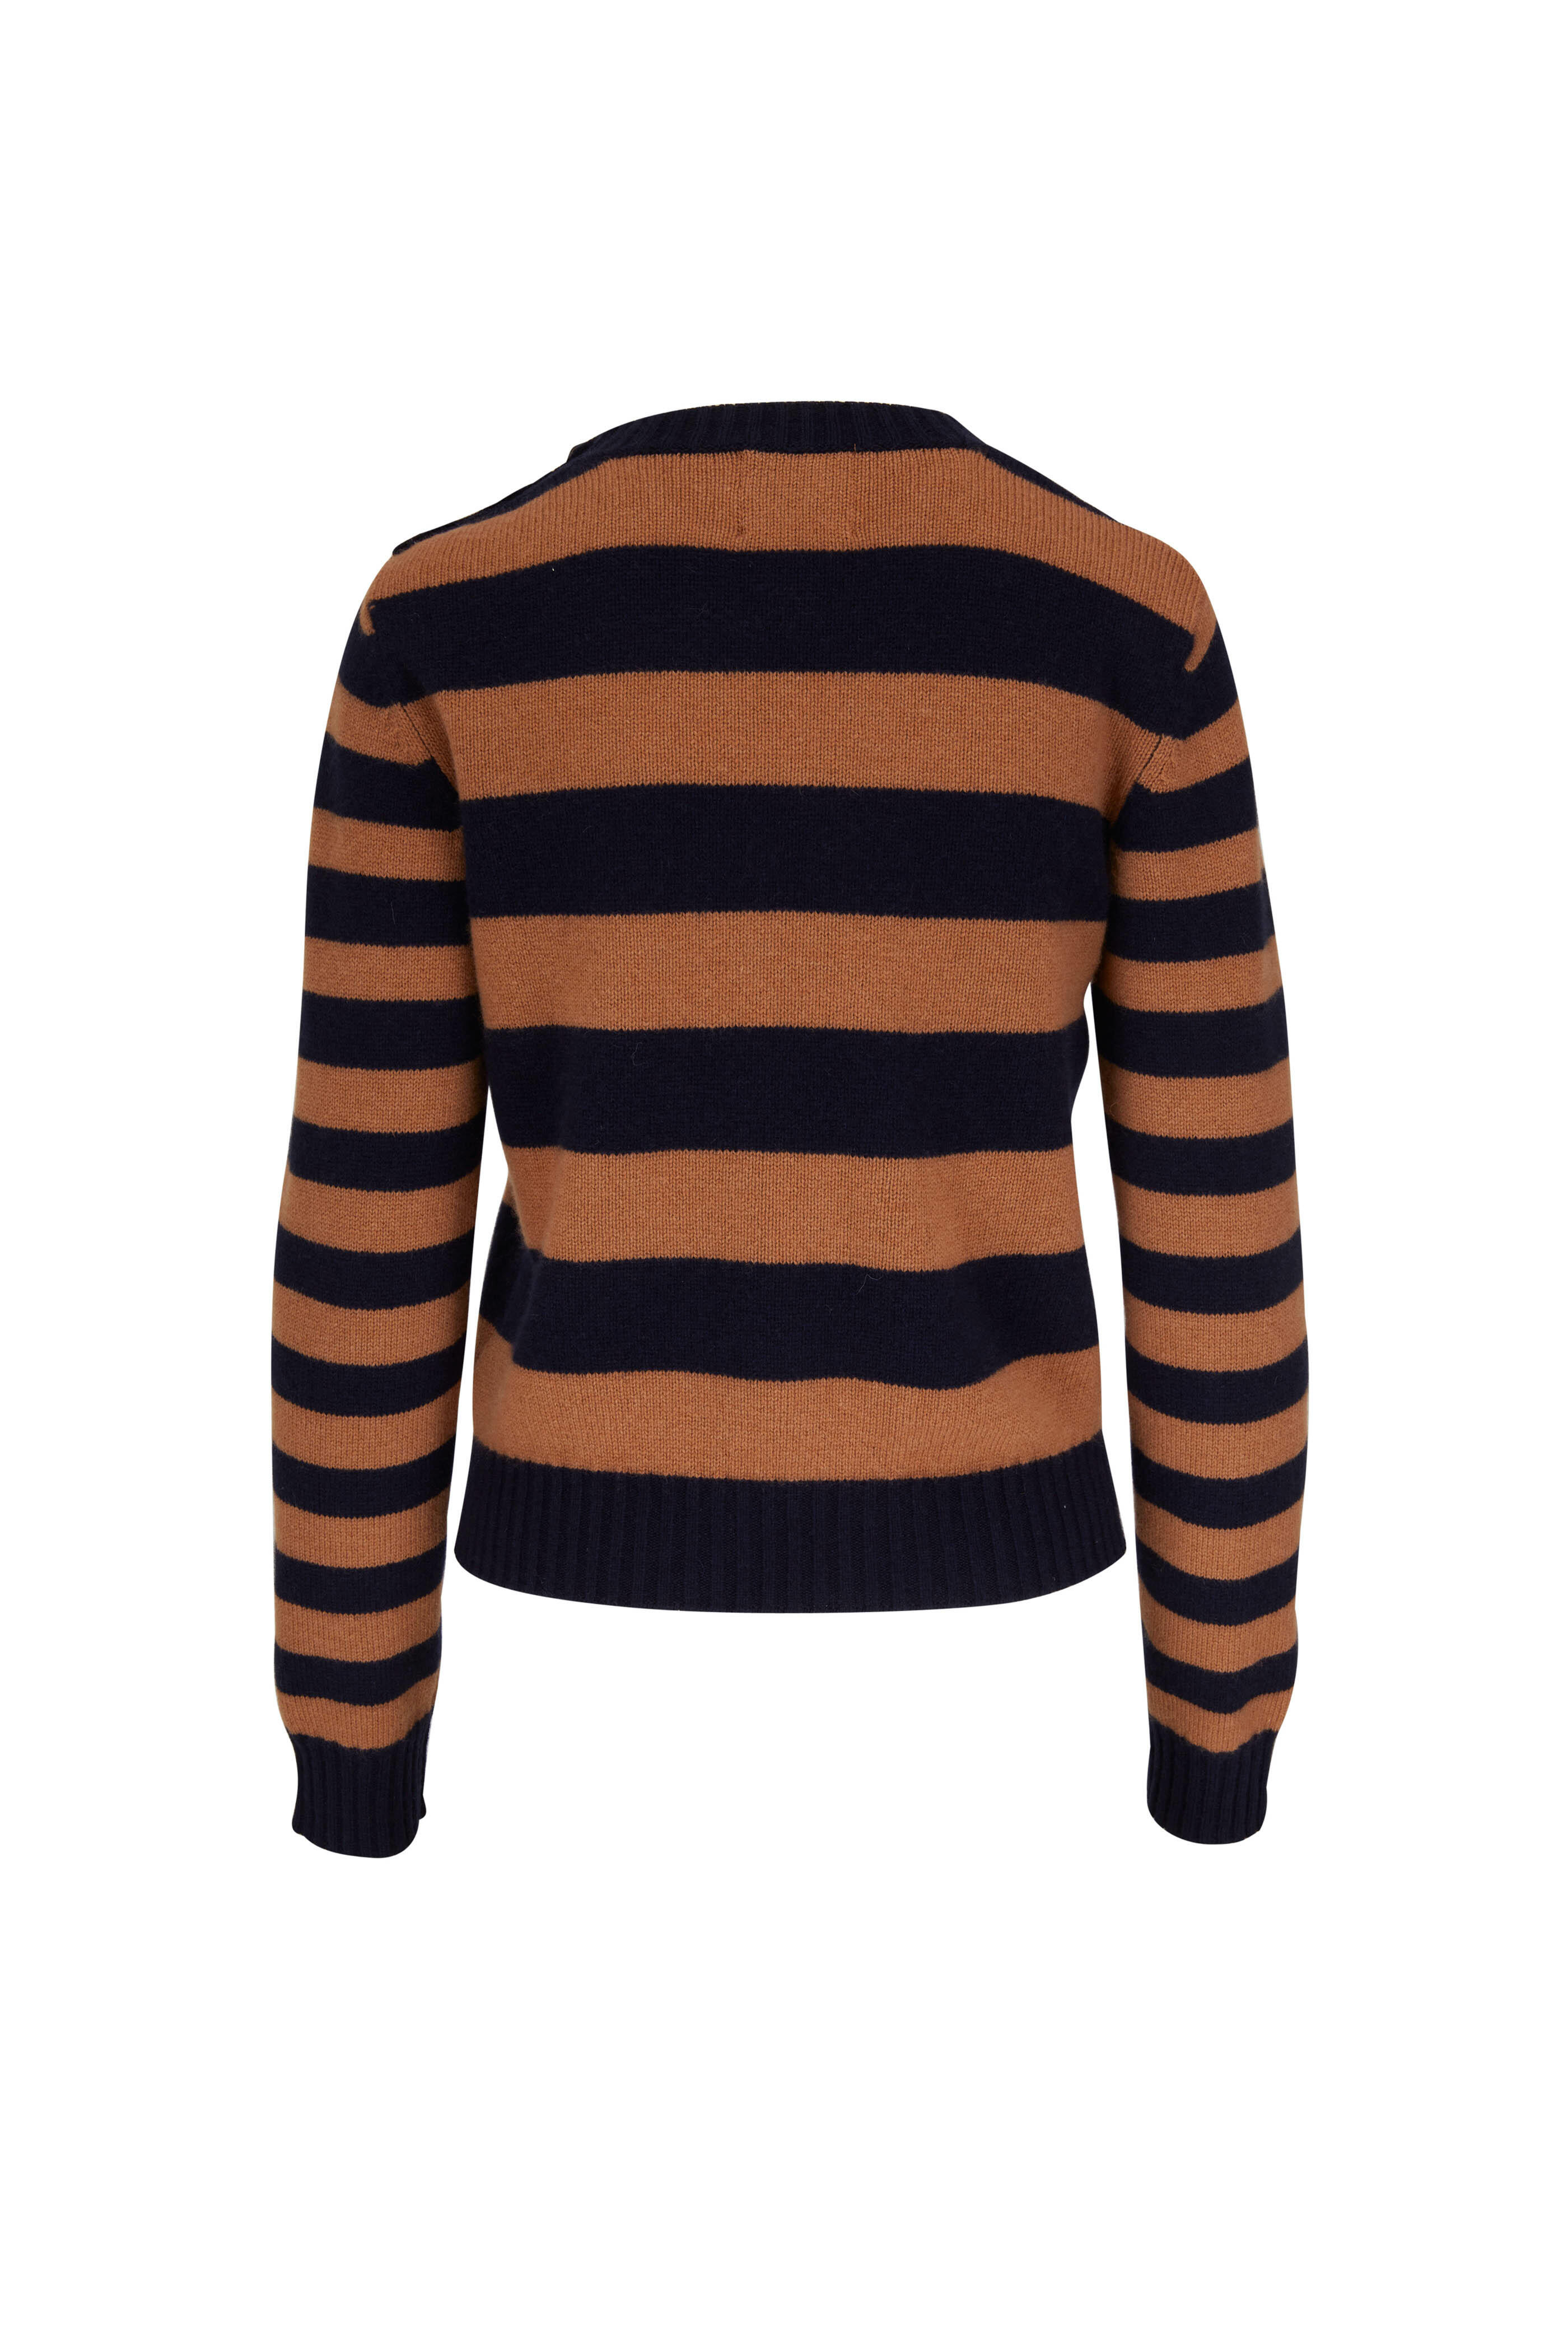 Jumper 1234 - Navy & Cashmere Sweater Camel Stripe